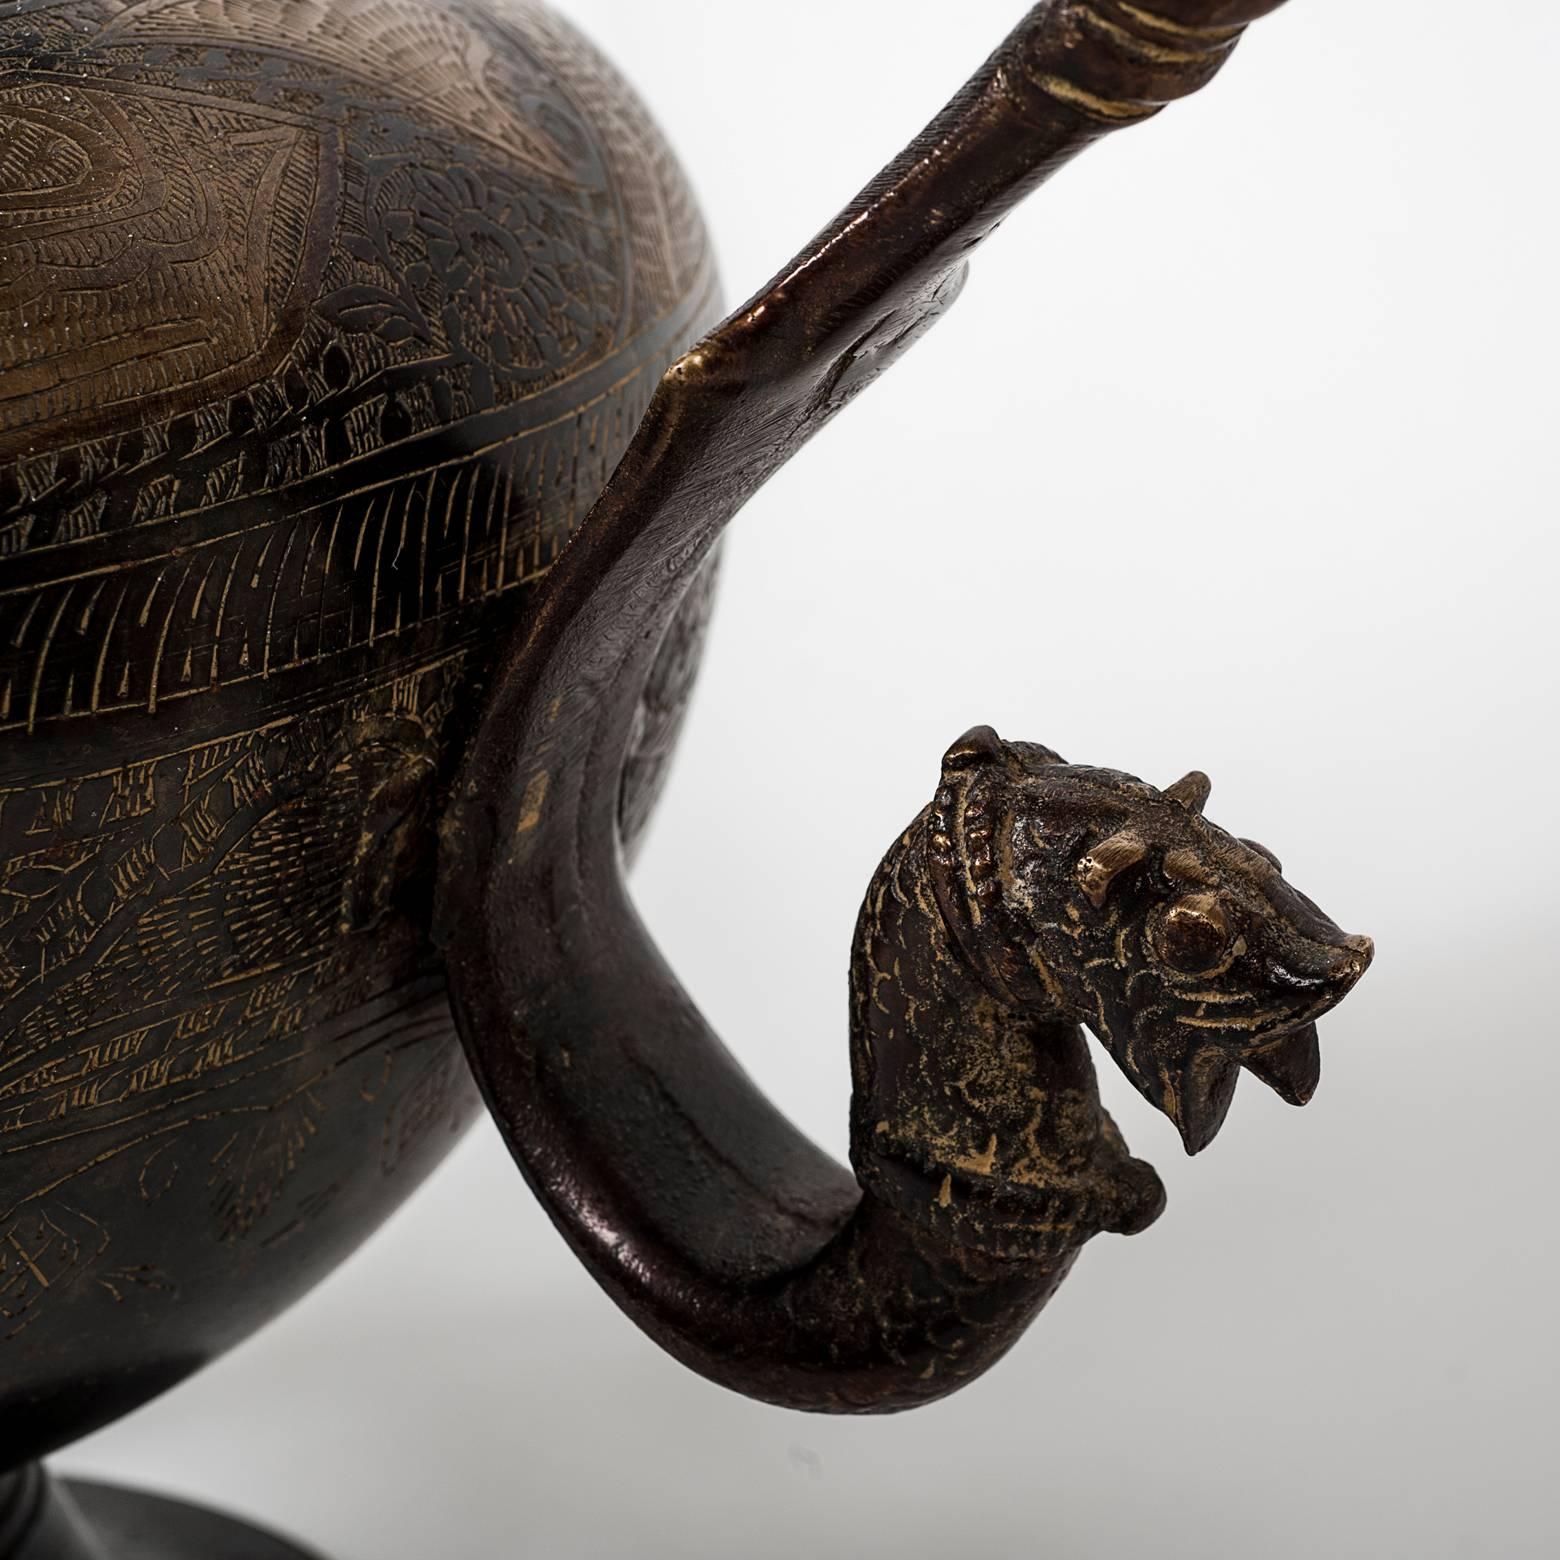 Antique bronze vase with animal, vegetal and alphabetic decoration 